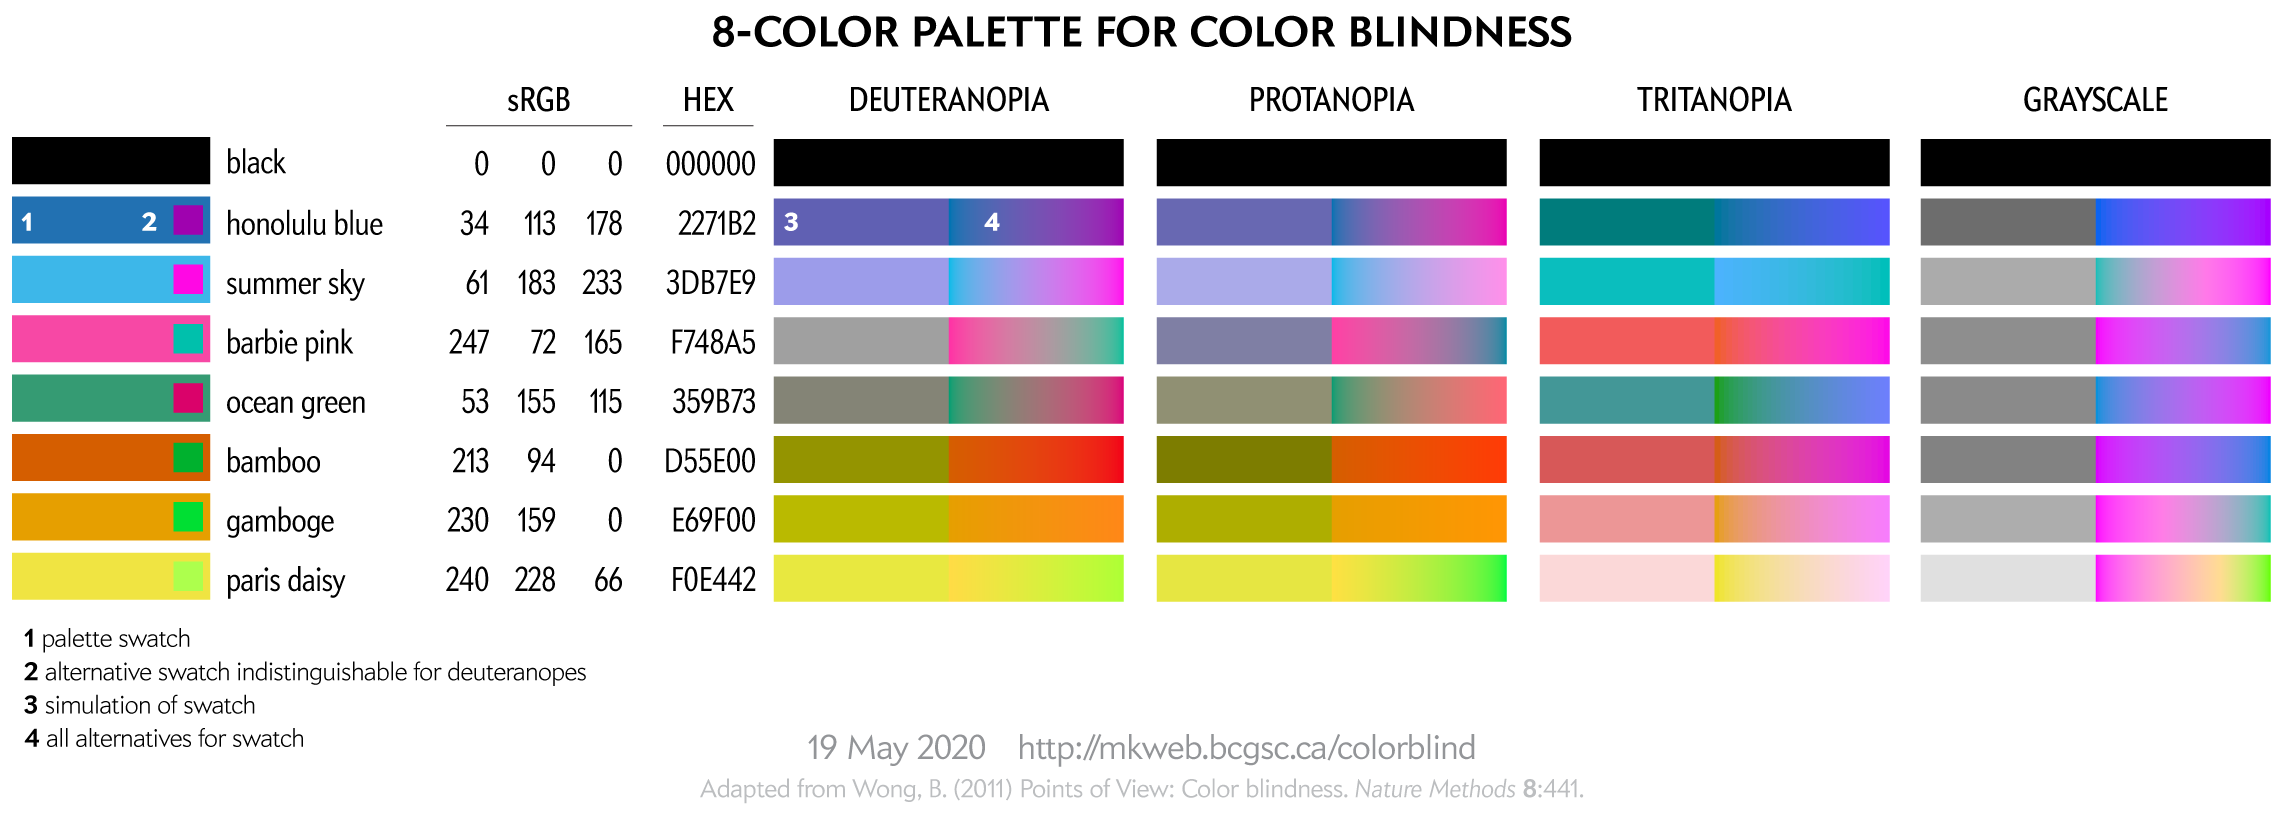 An 8-color palette for color blindness. / Martin Krzywinski @MKrzywinski mkweb.bcgsc.ca